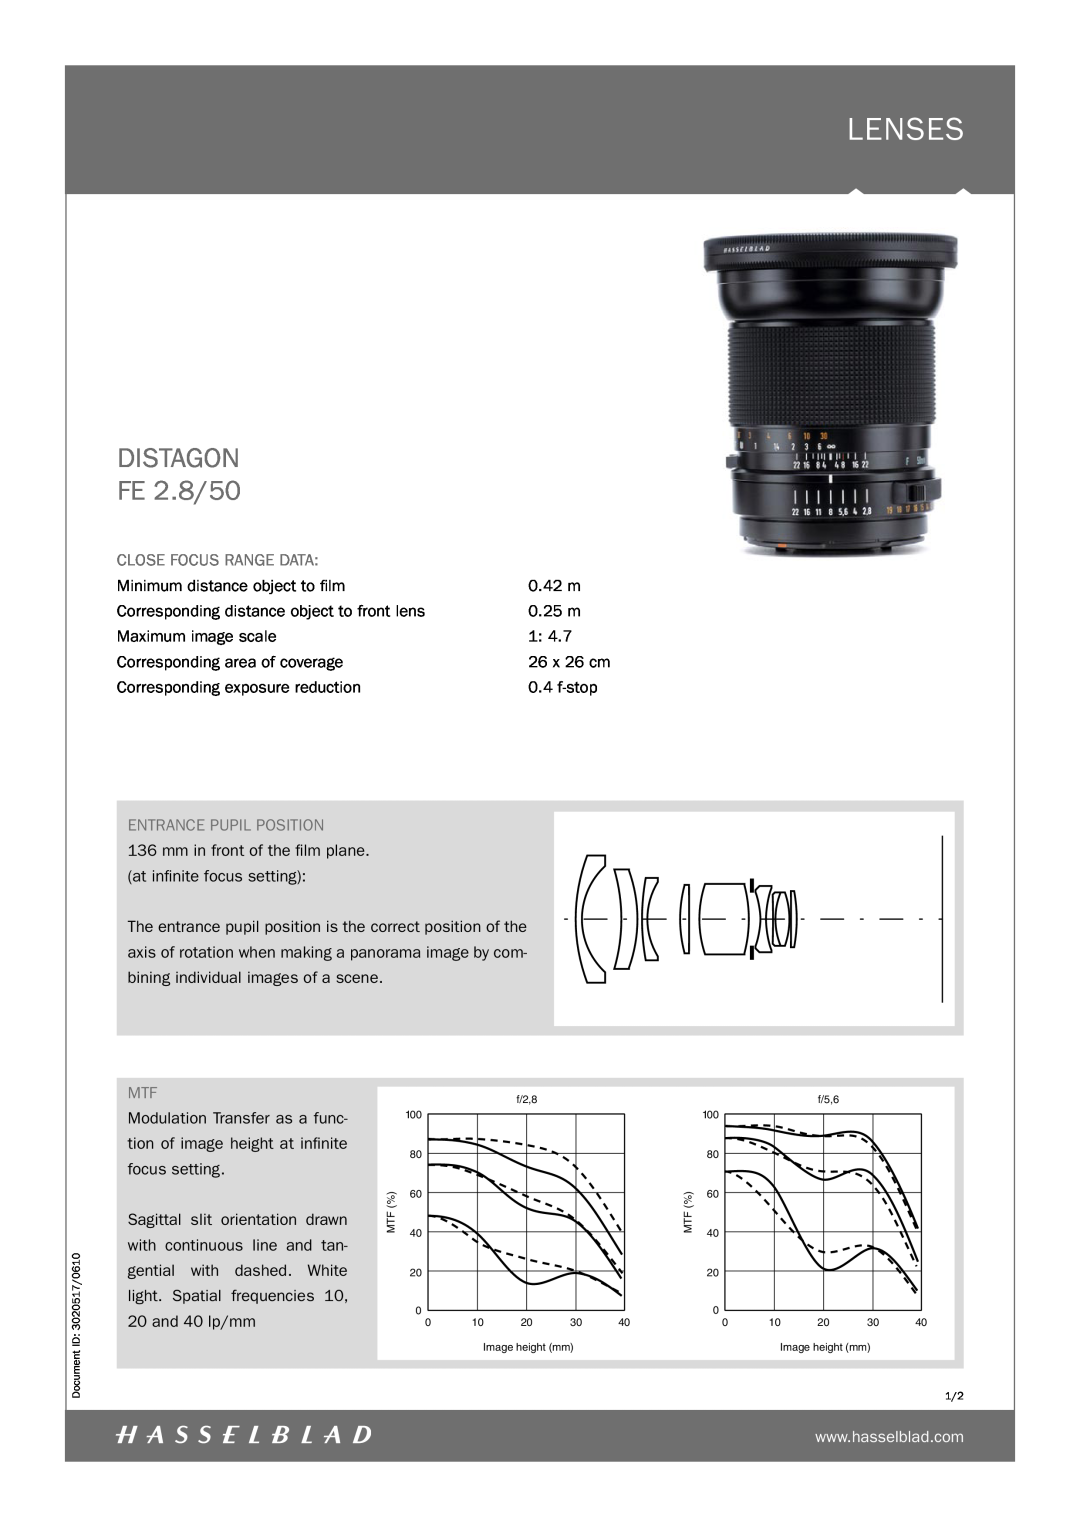 Hasselblad manual Lenses, DISTAGON FE 2.8/50, Close Focus Range Data, Entrance Pupil Position 